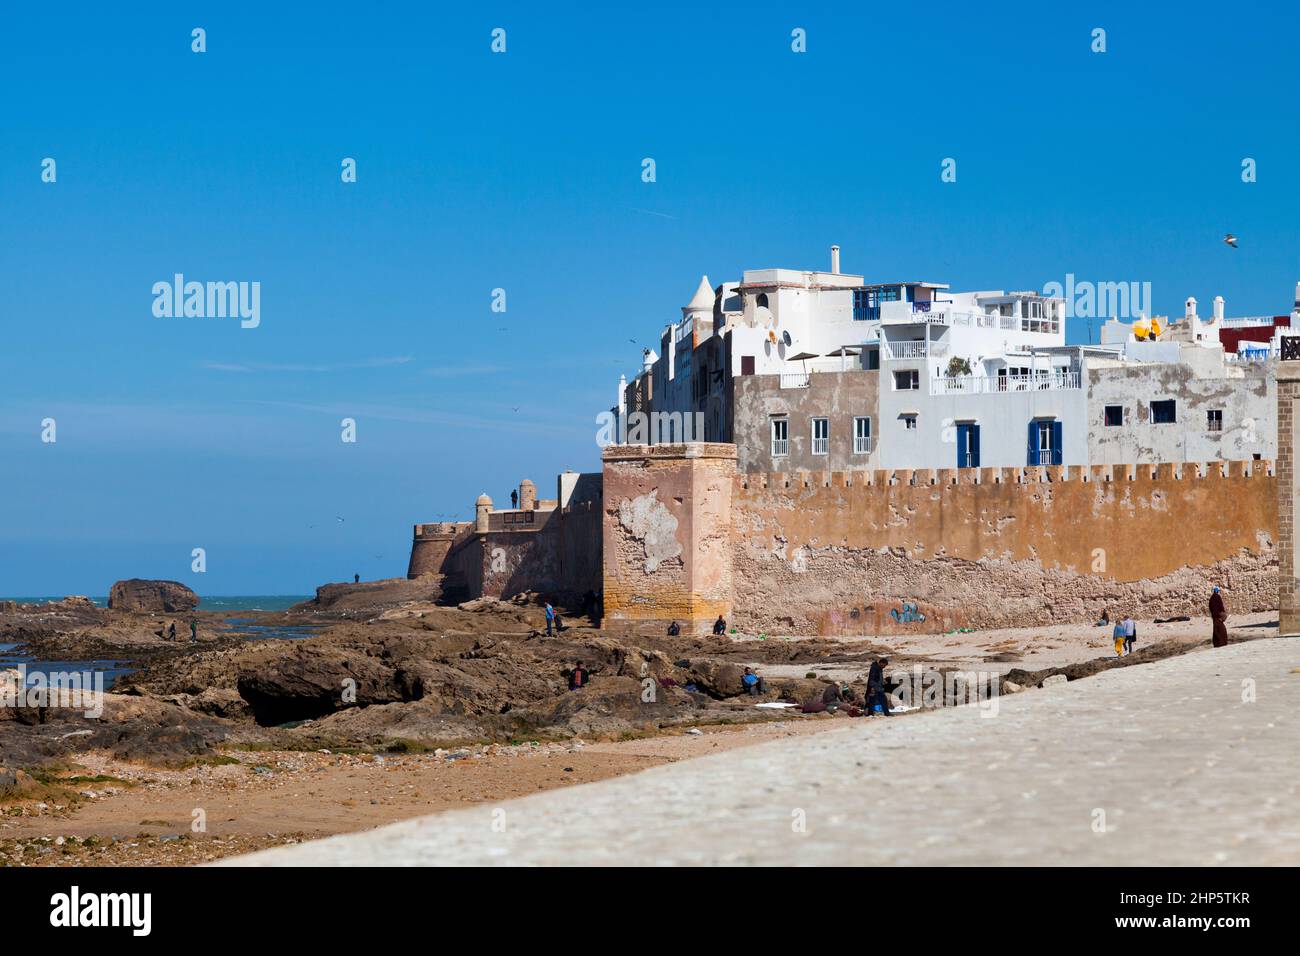 Essaouira, Maroc - janvier 29 2019 : murs fortifiés entourant Essaouira. Banque D'Images